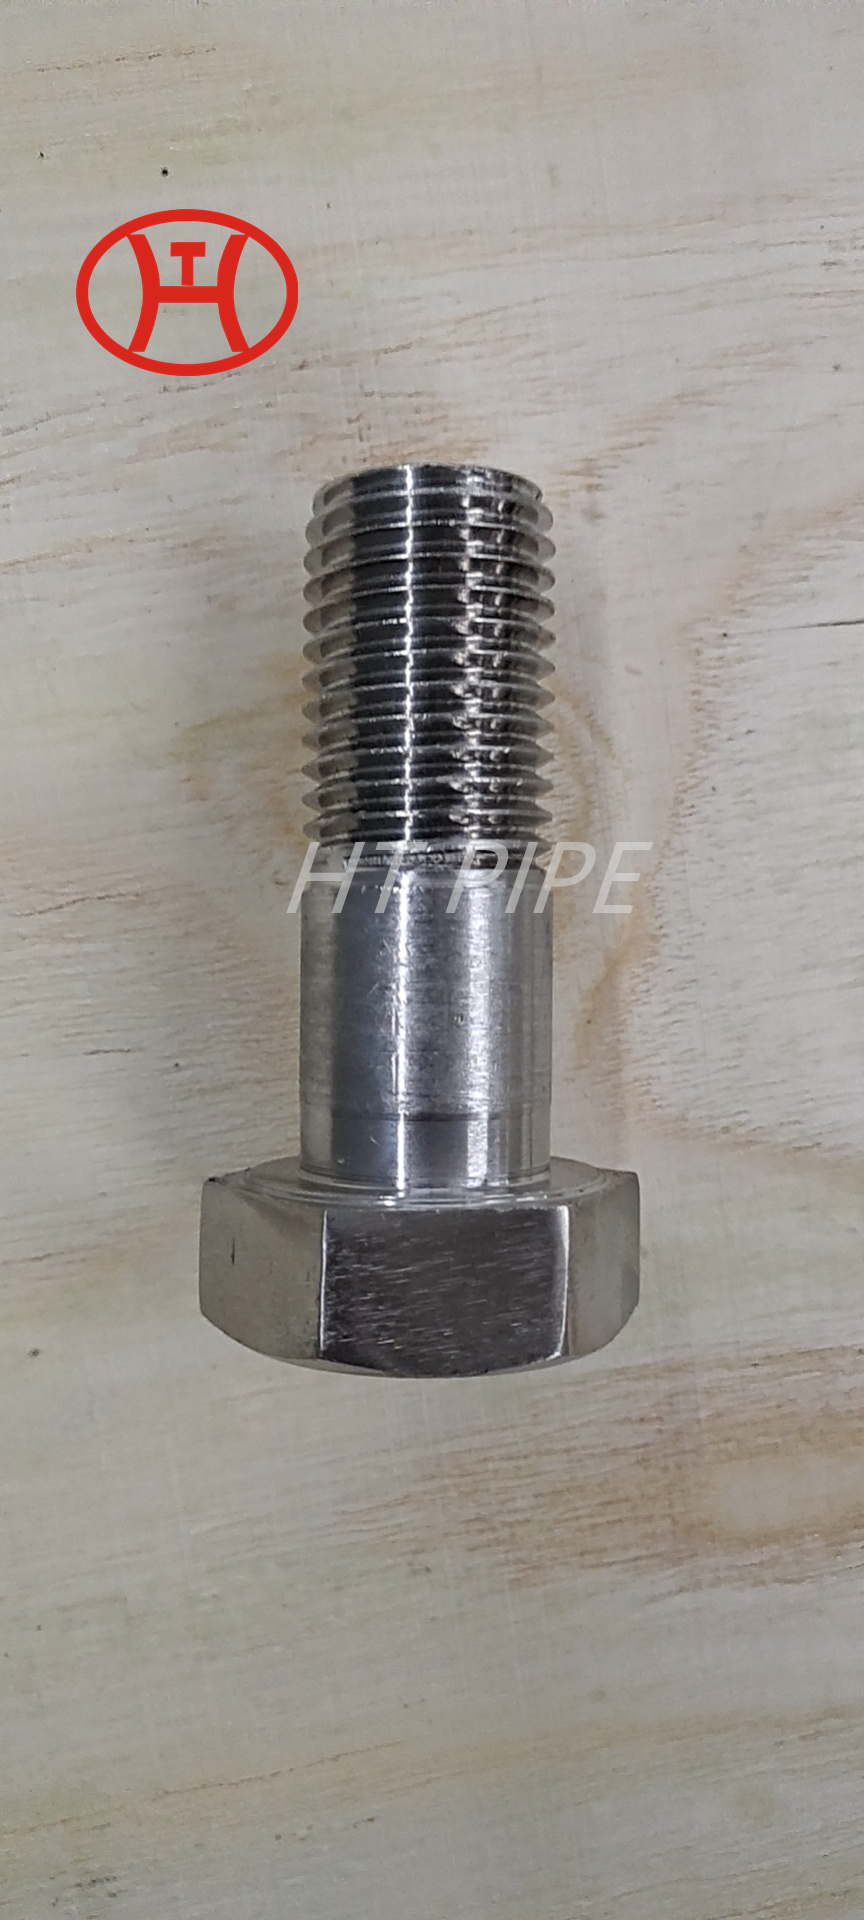 Super Duplex stainless steel S32750 1.4410 F53 full thread hex bolt DIN933